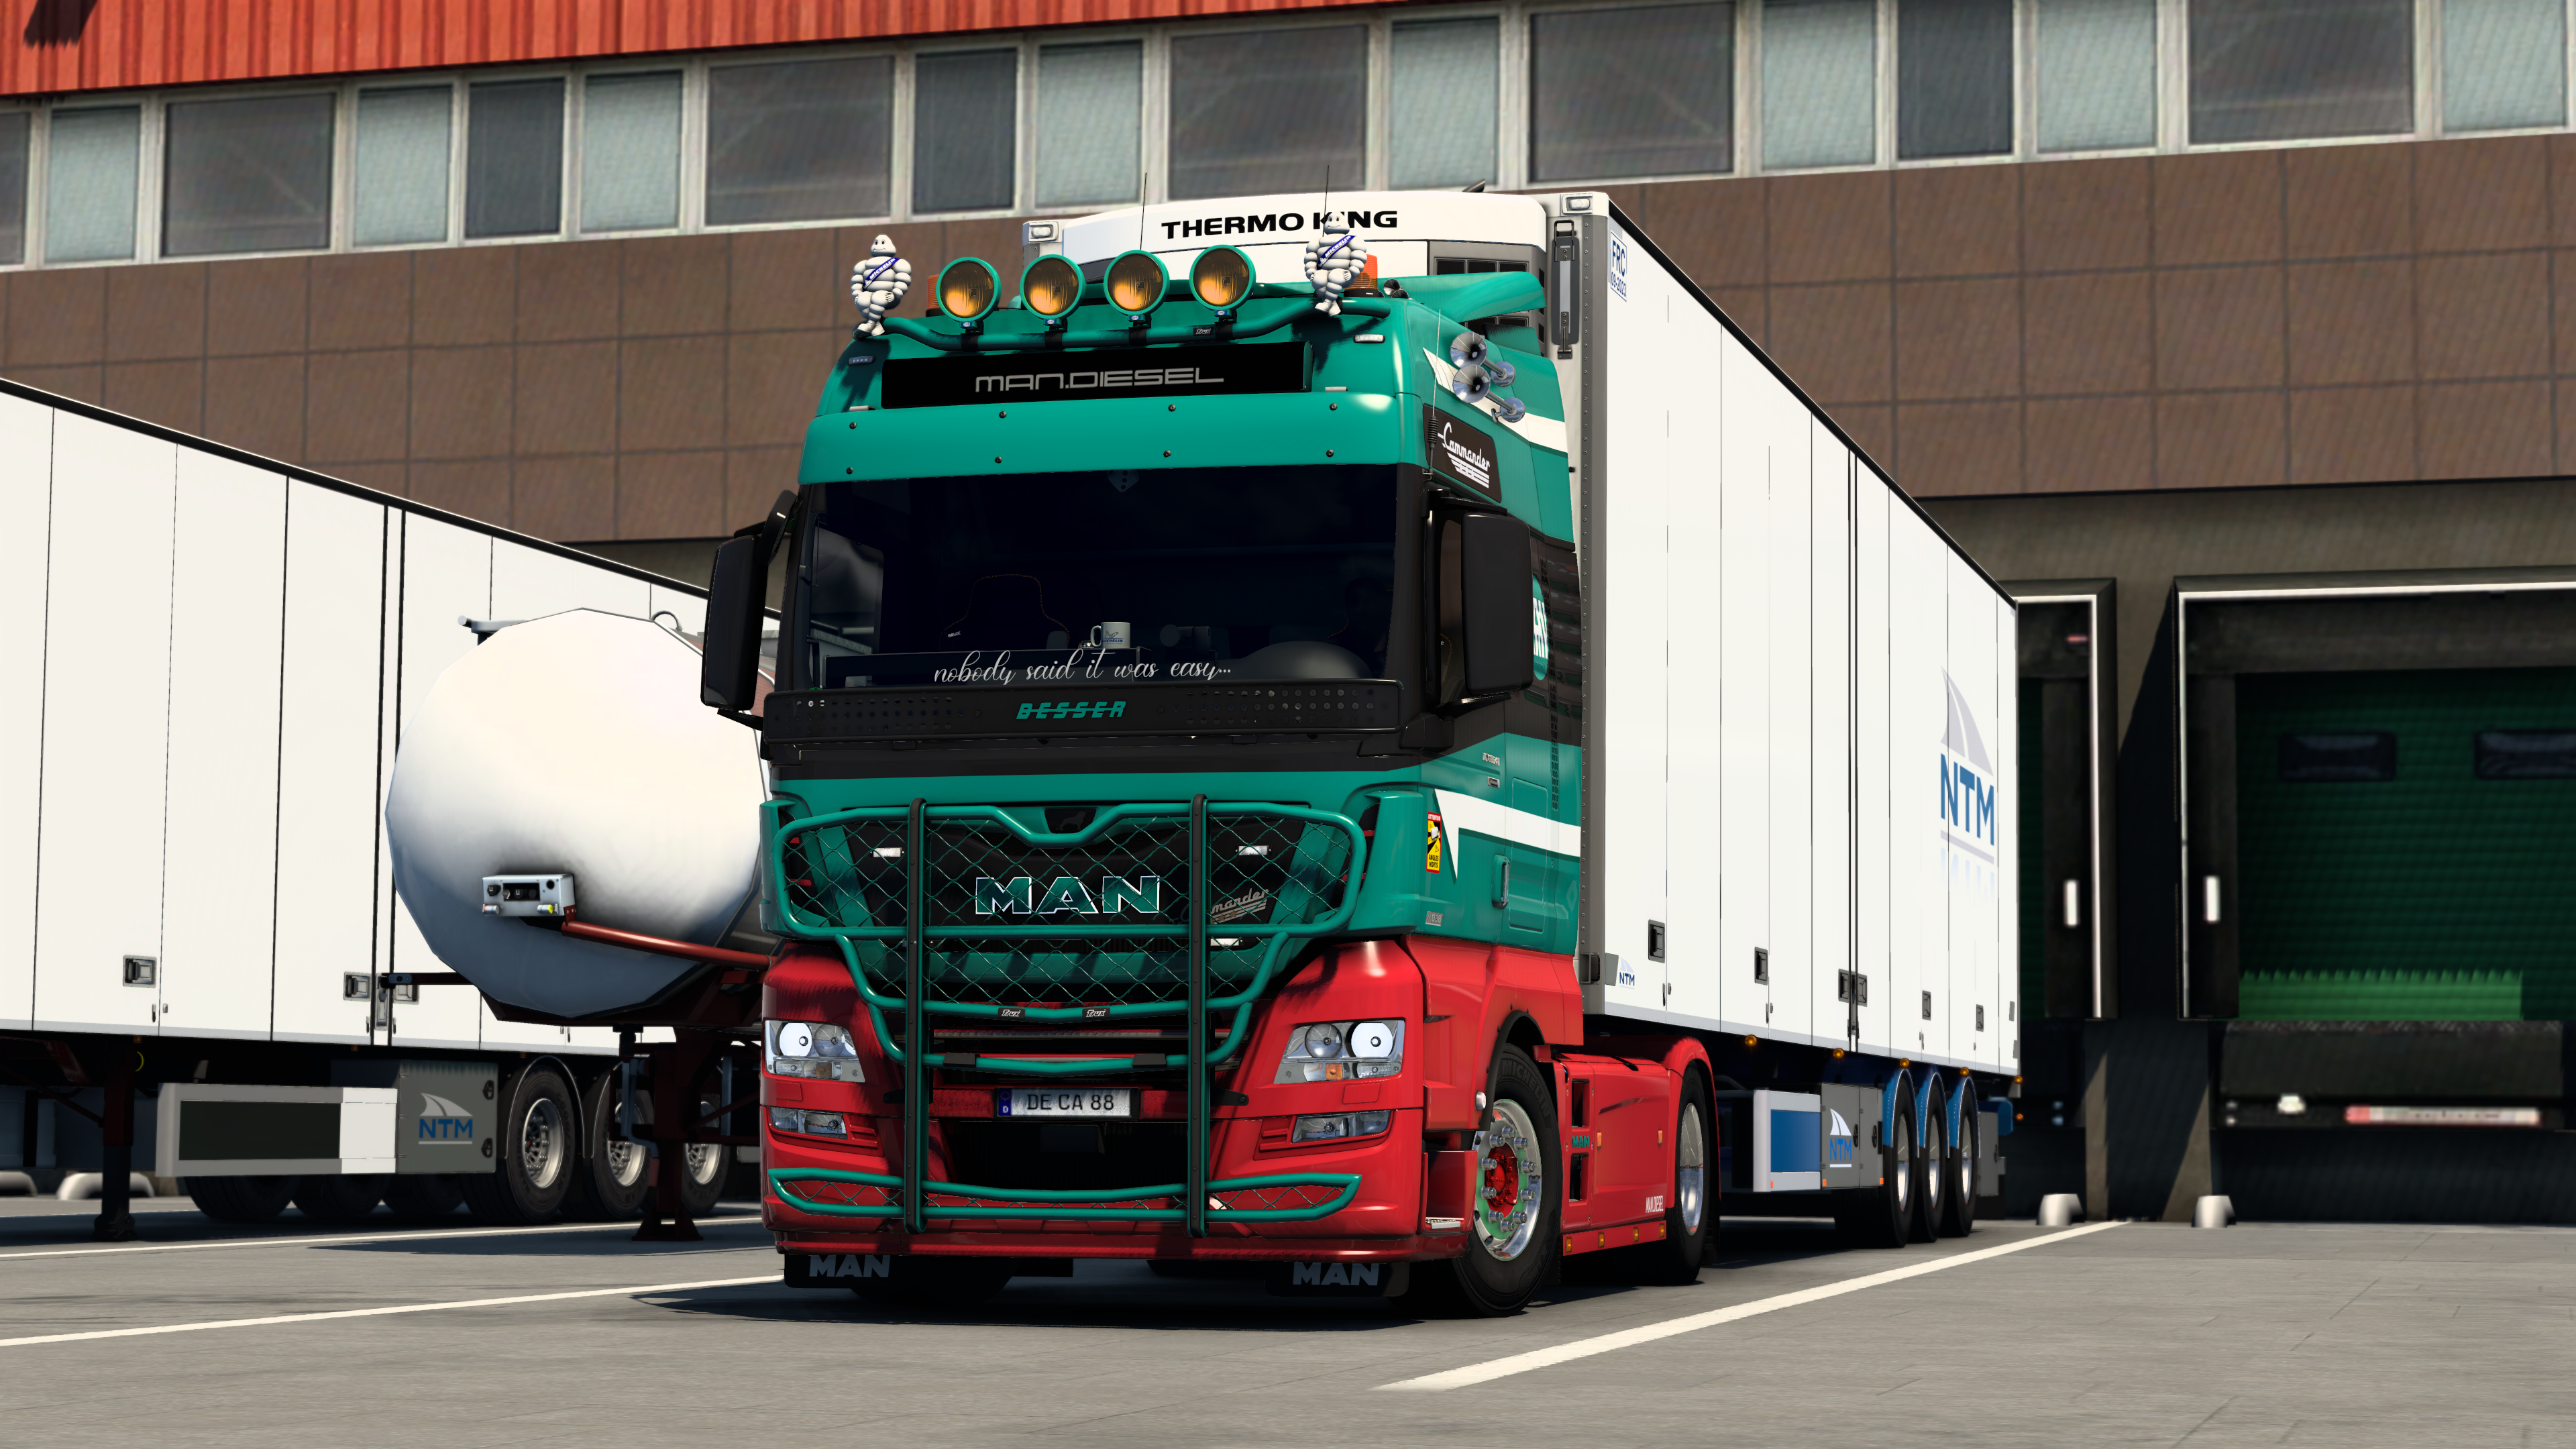 Truck EuroTruckSimulator2 MAN Company CGi Vehicle Video Games Front Angle View 3840x2160